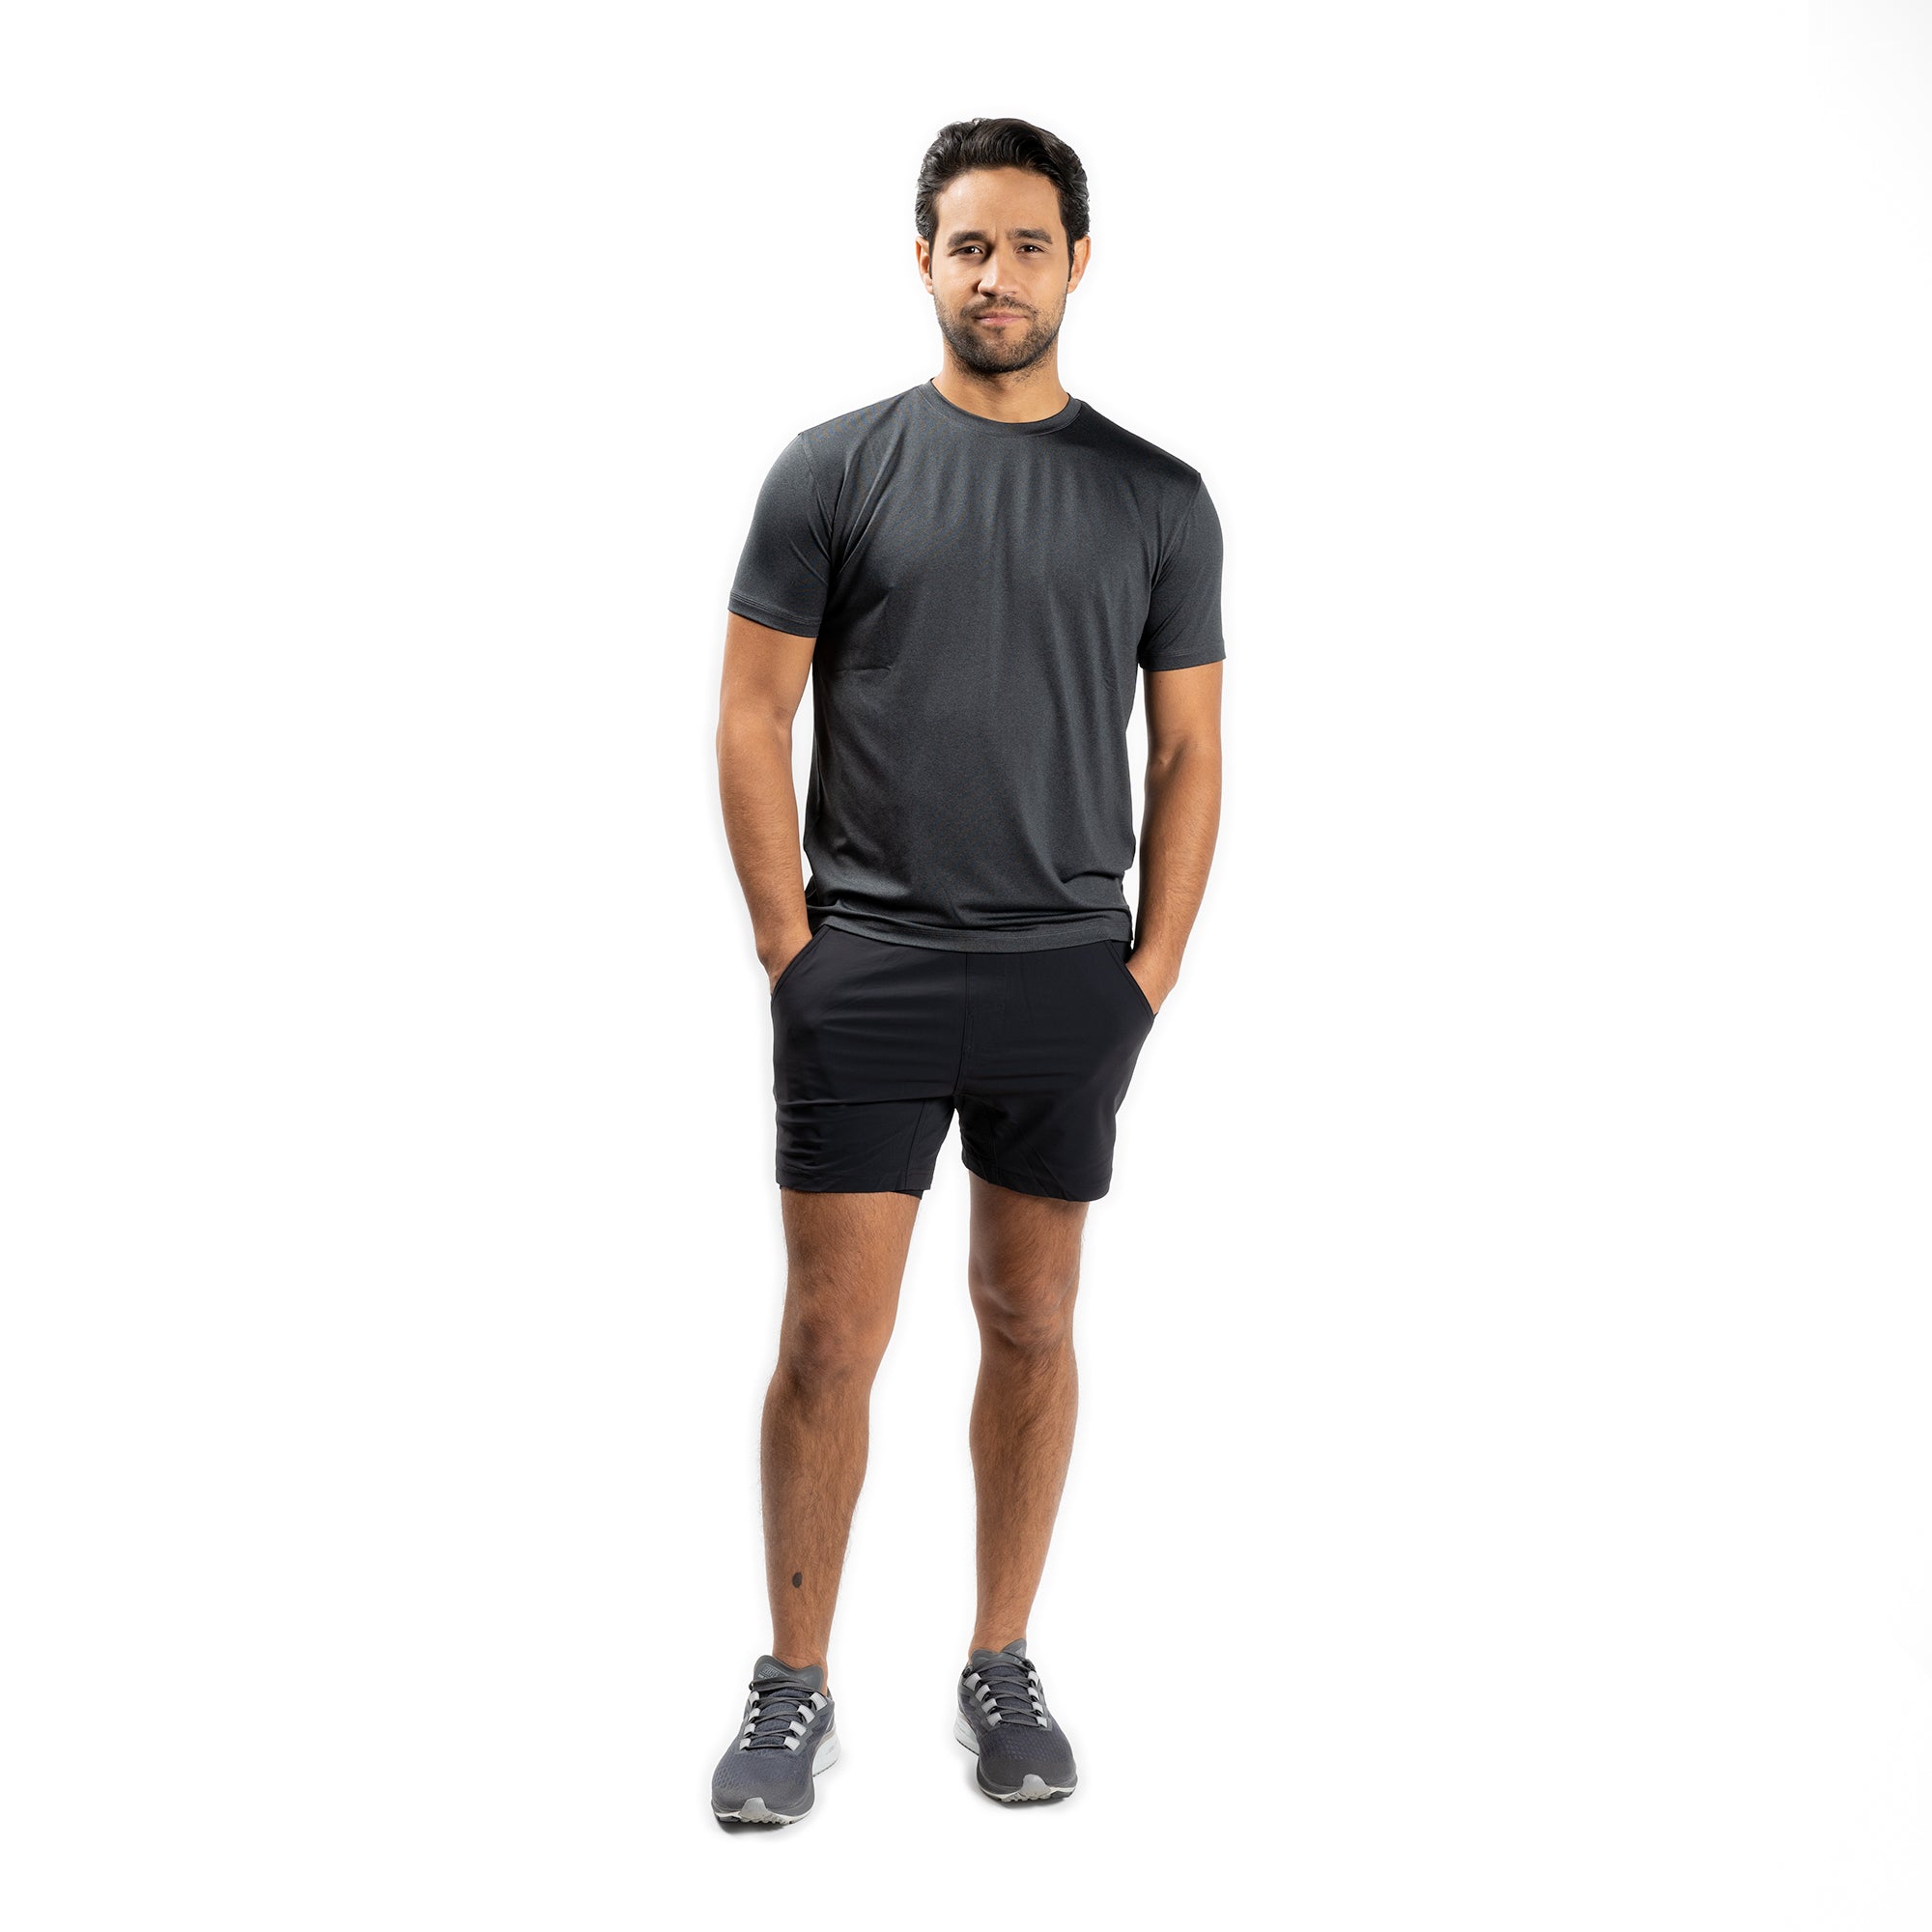 Workout Shirt - Black